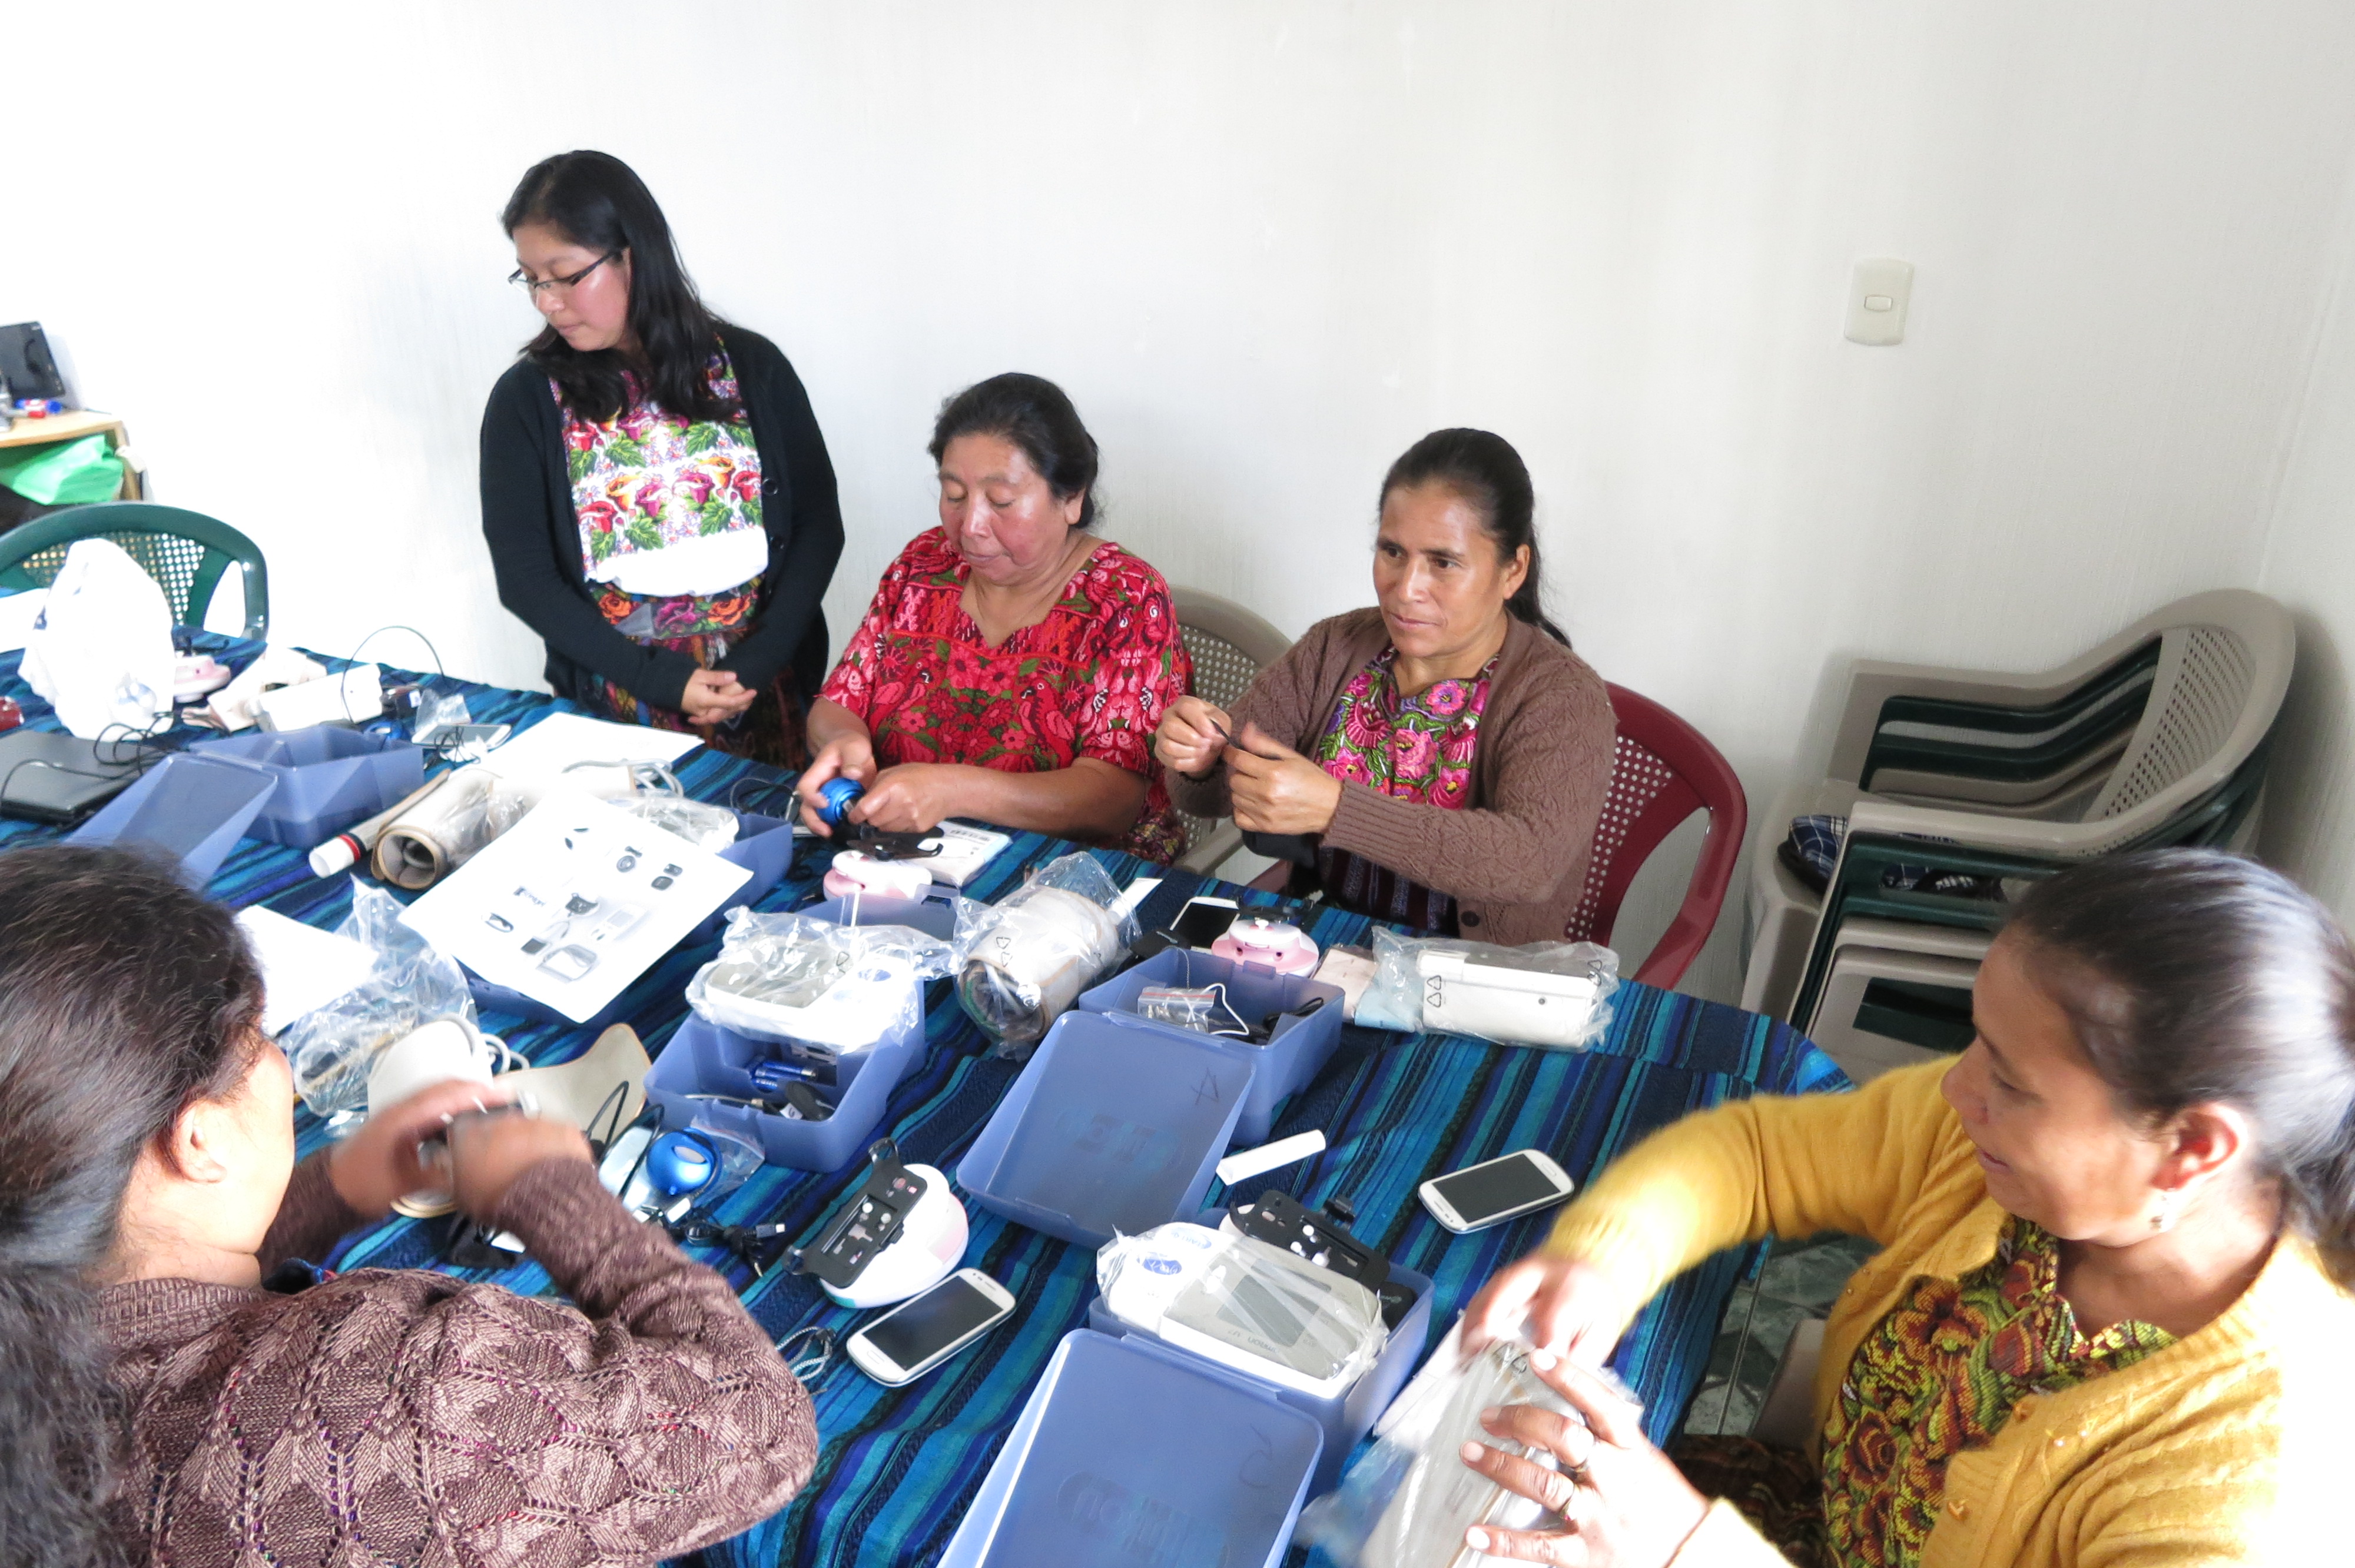 Dr. Gari Clifford's team's app saves lives of Maya women in Guatemala